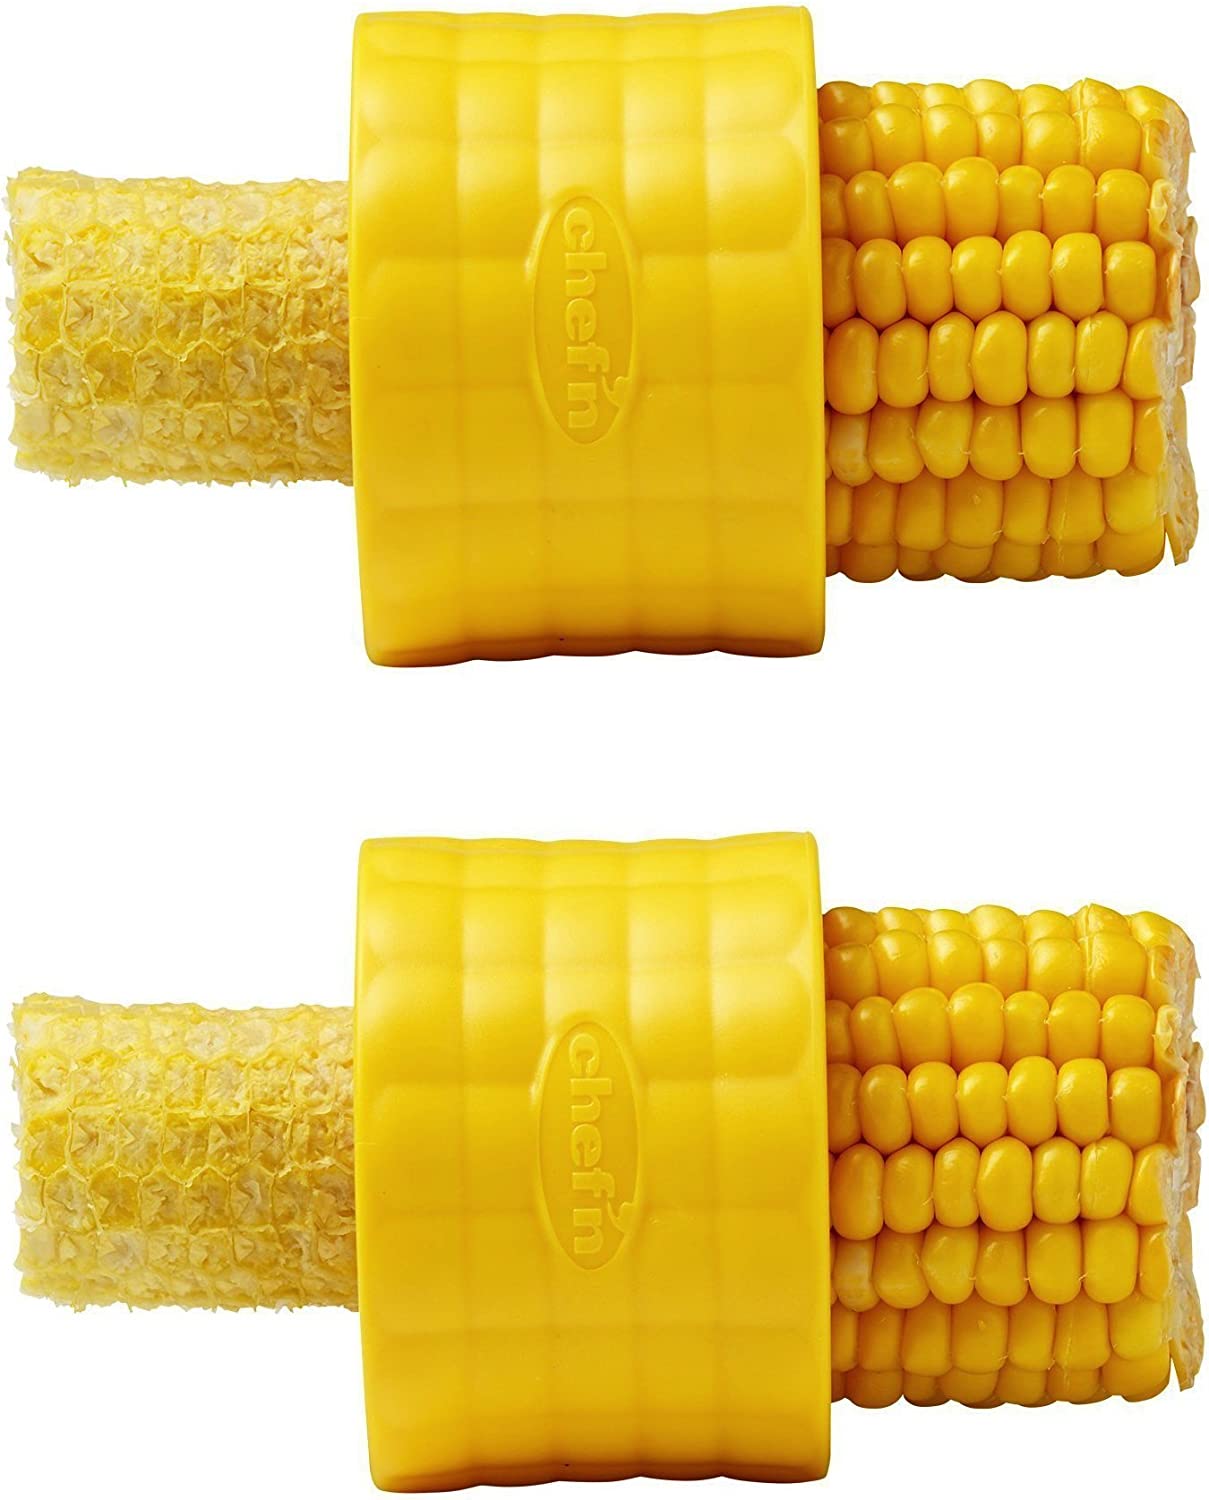 Chef'n Cob Corn Stripper, Yellow